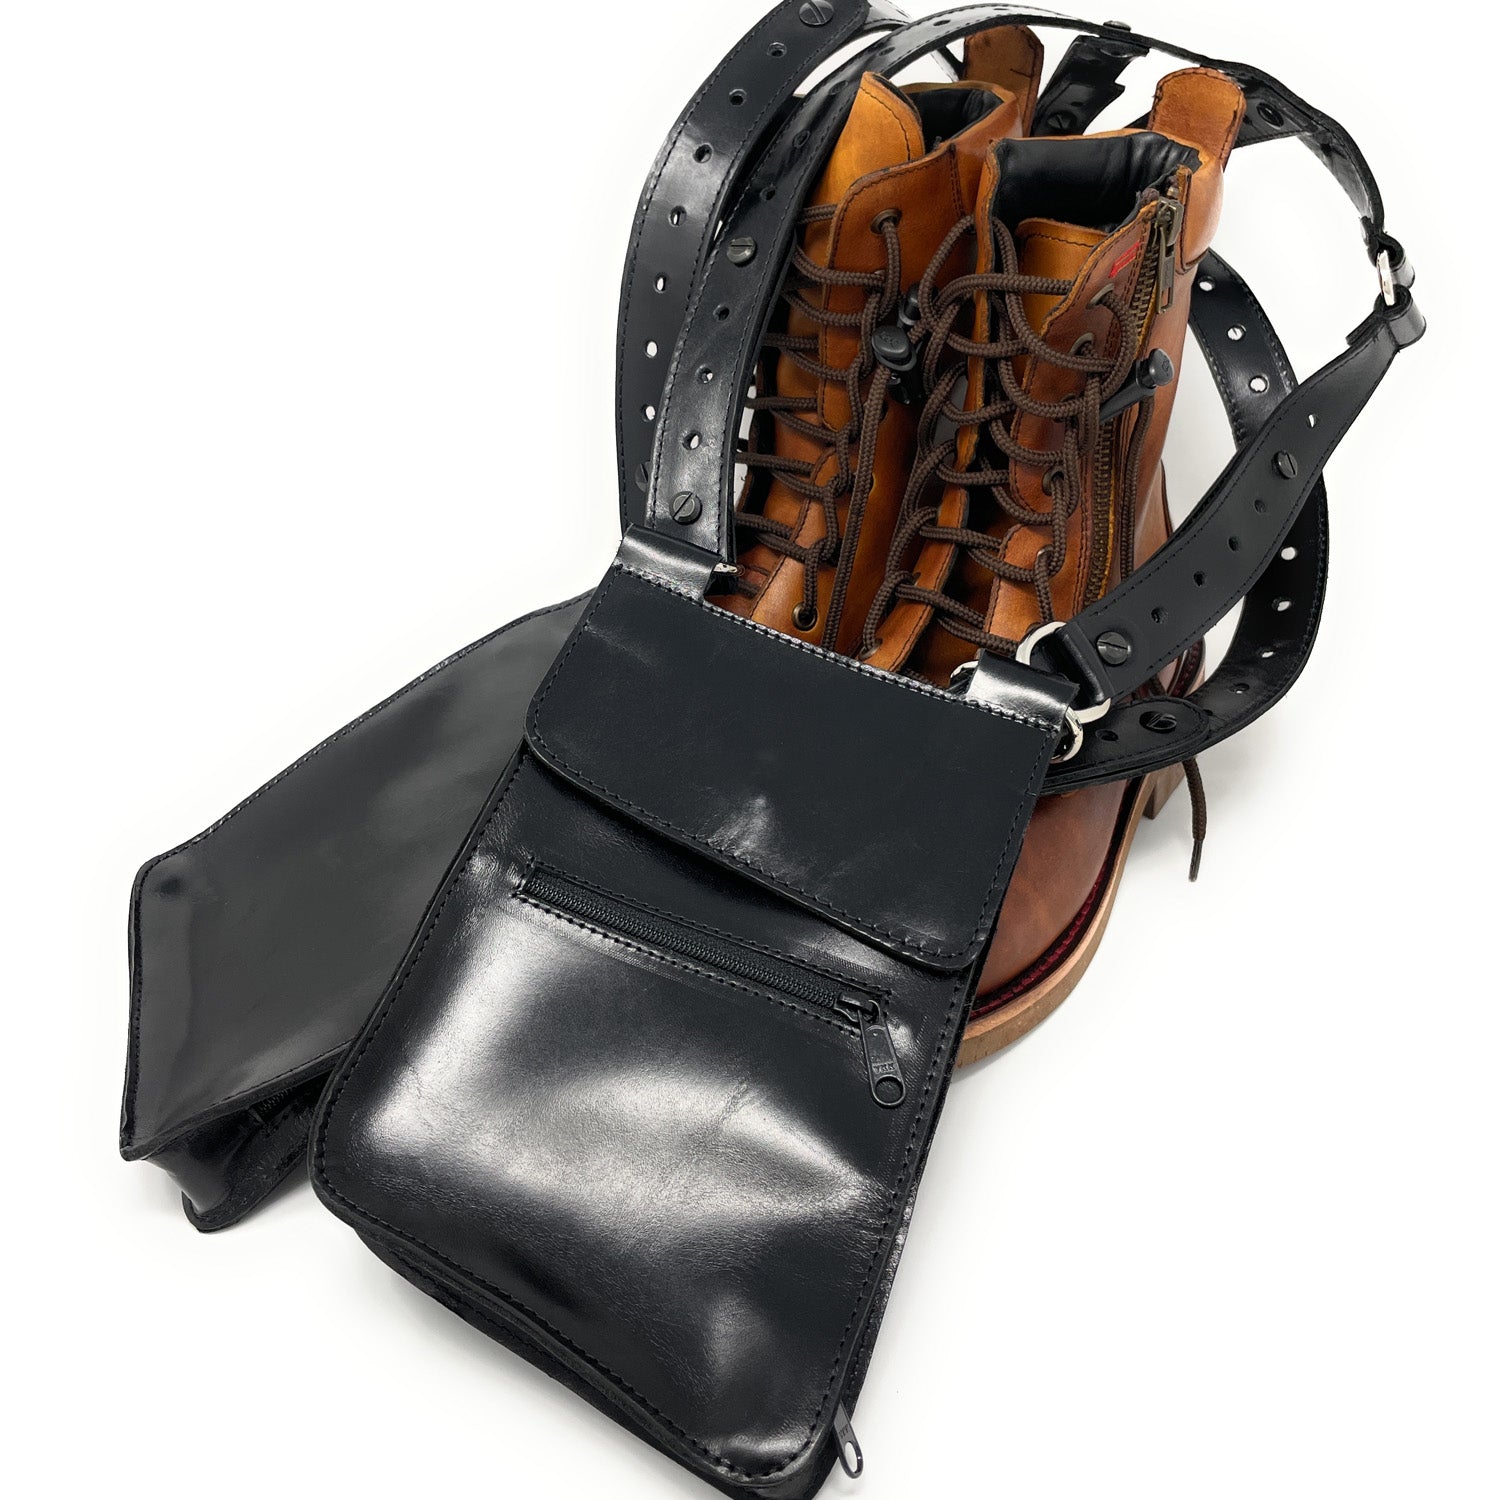 Black Leather Utility Harness / Holster Bag